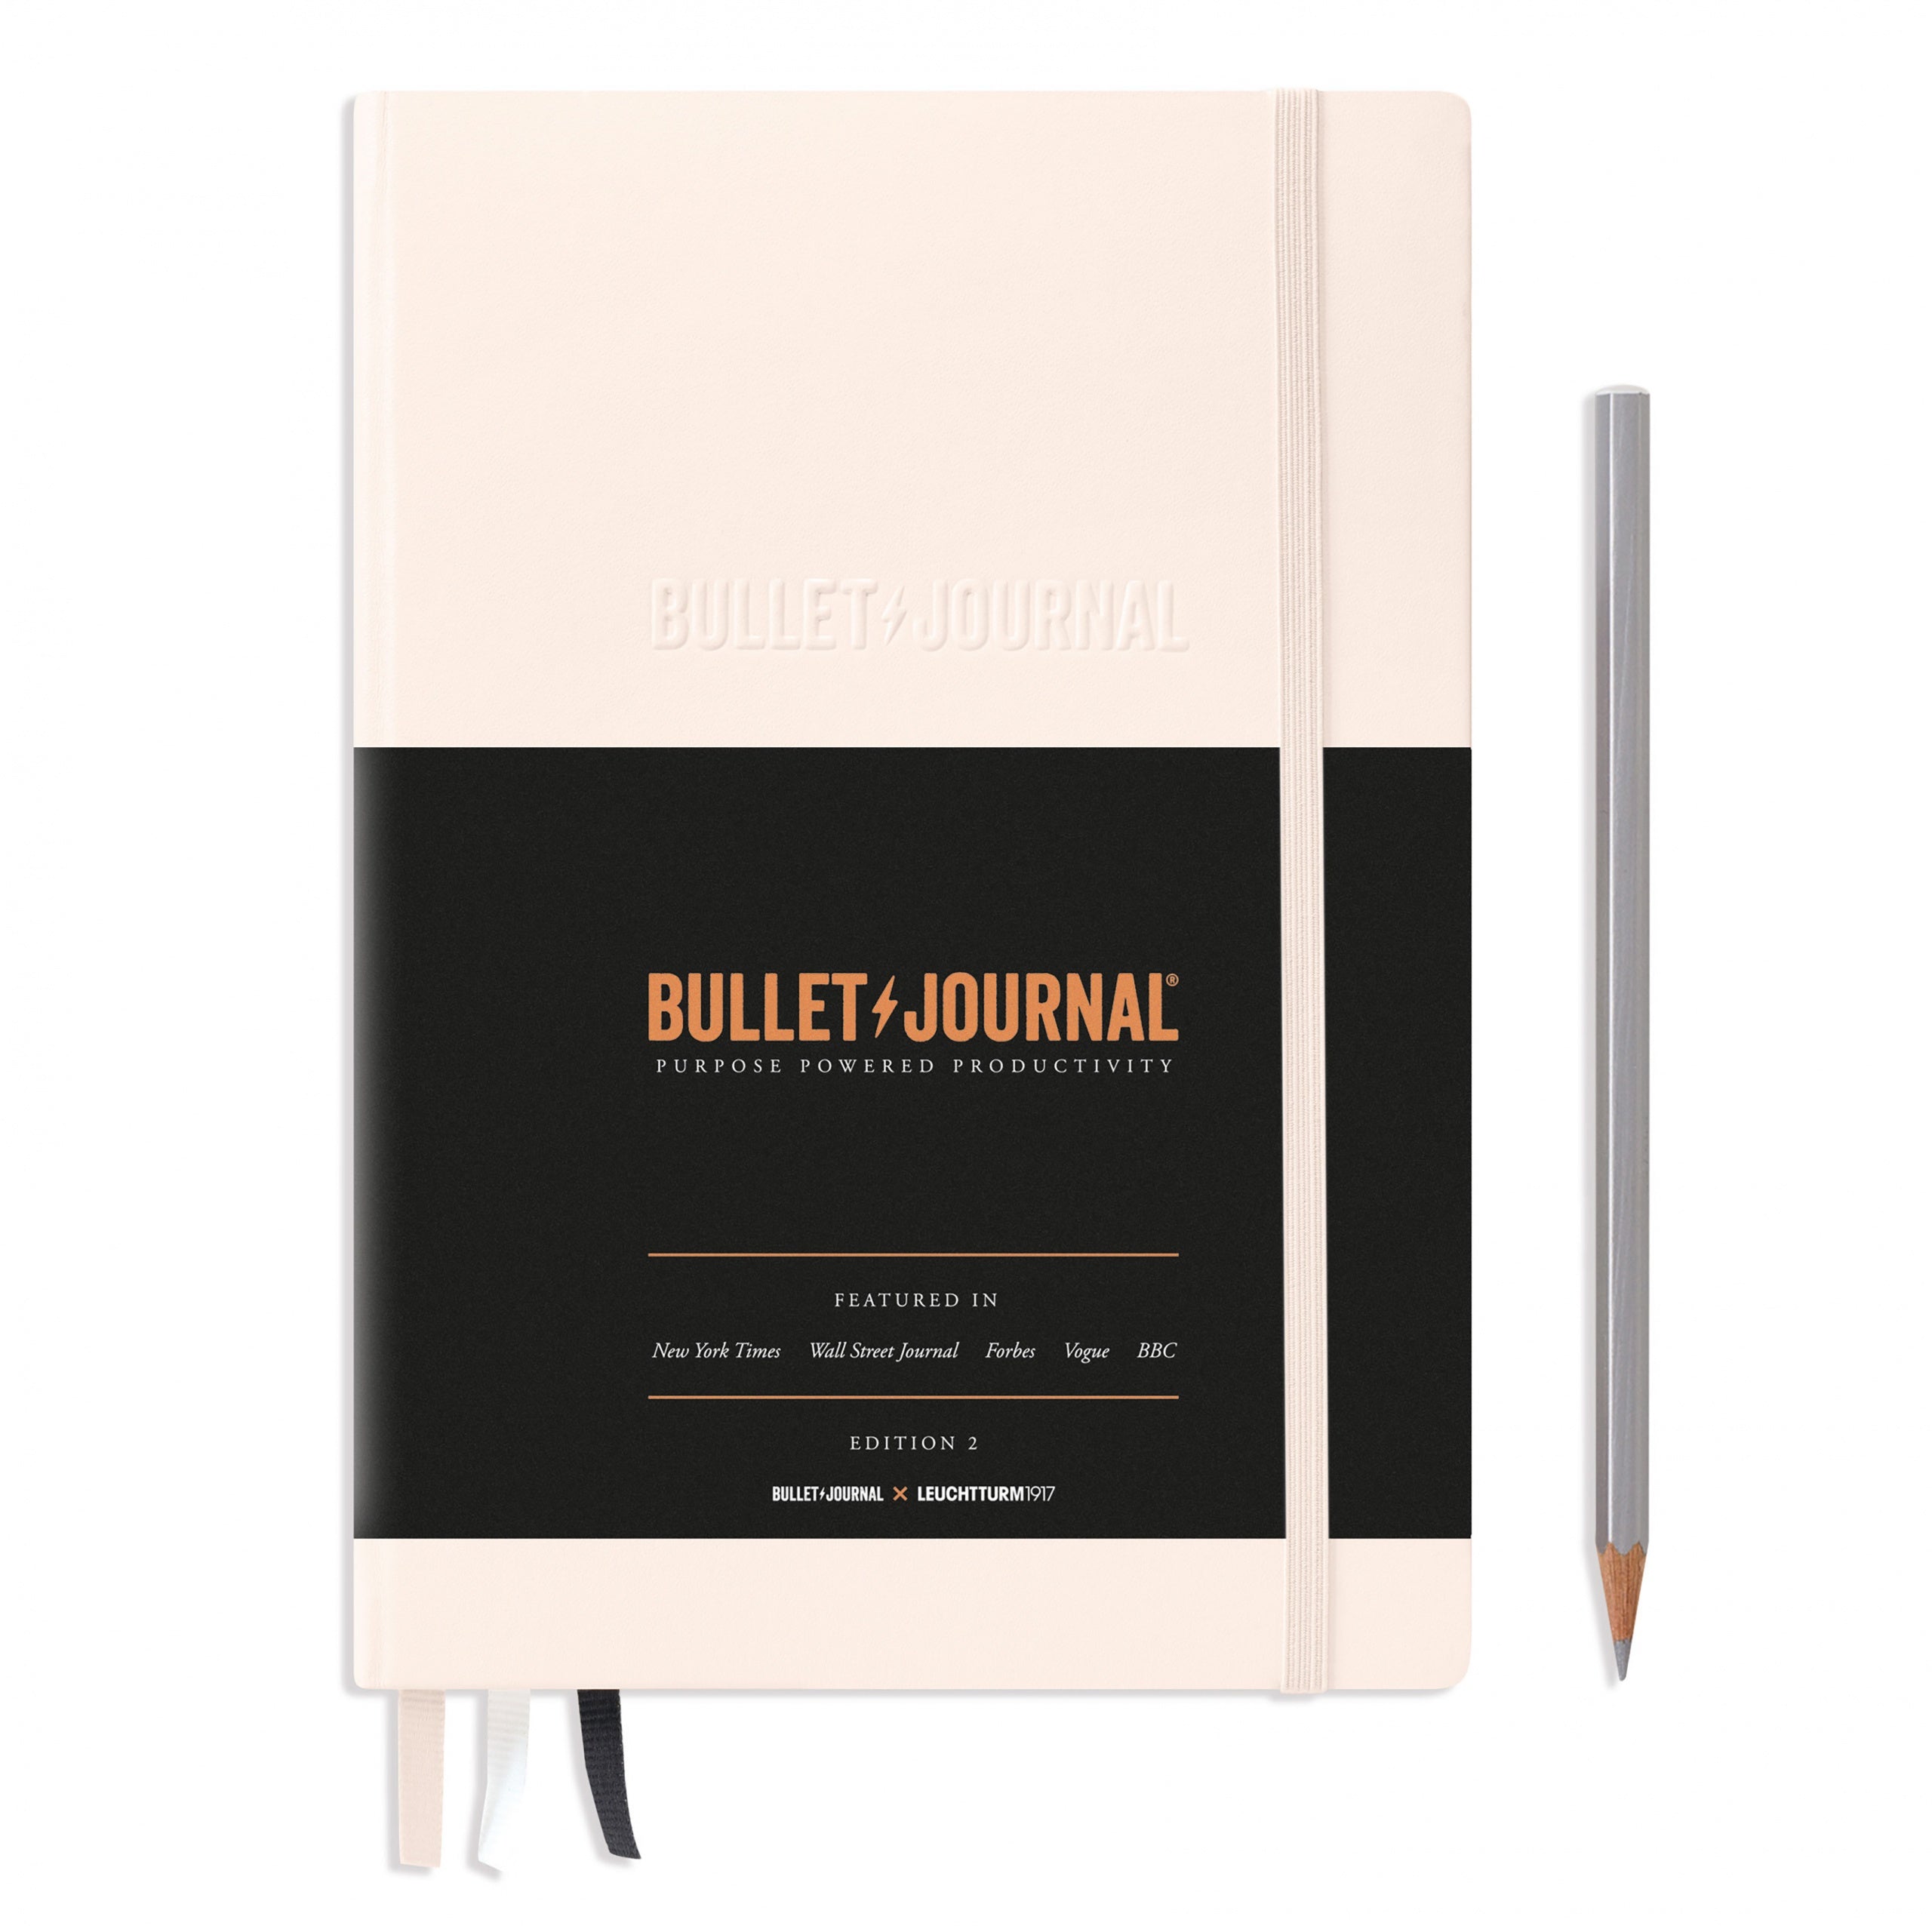 Bullet journal supplies kopen 